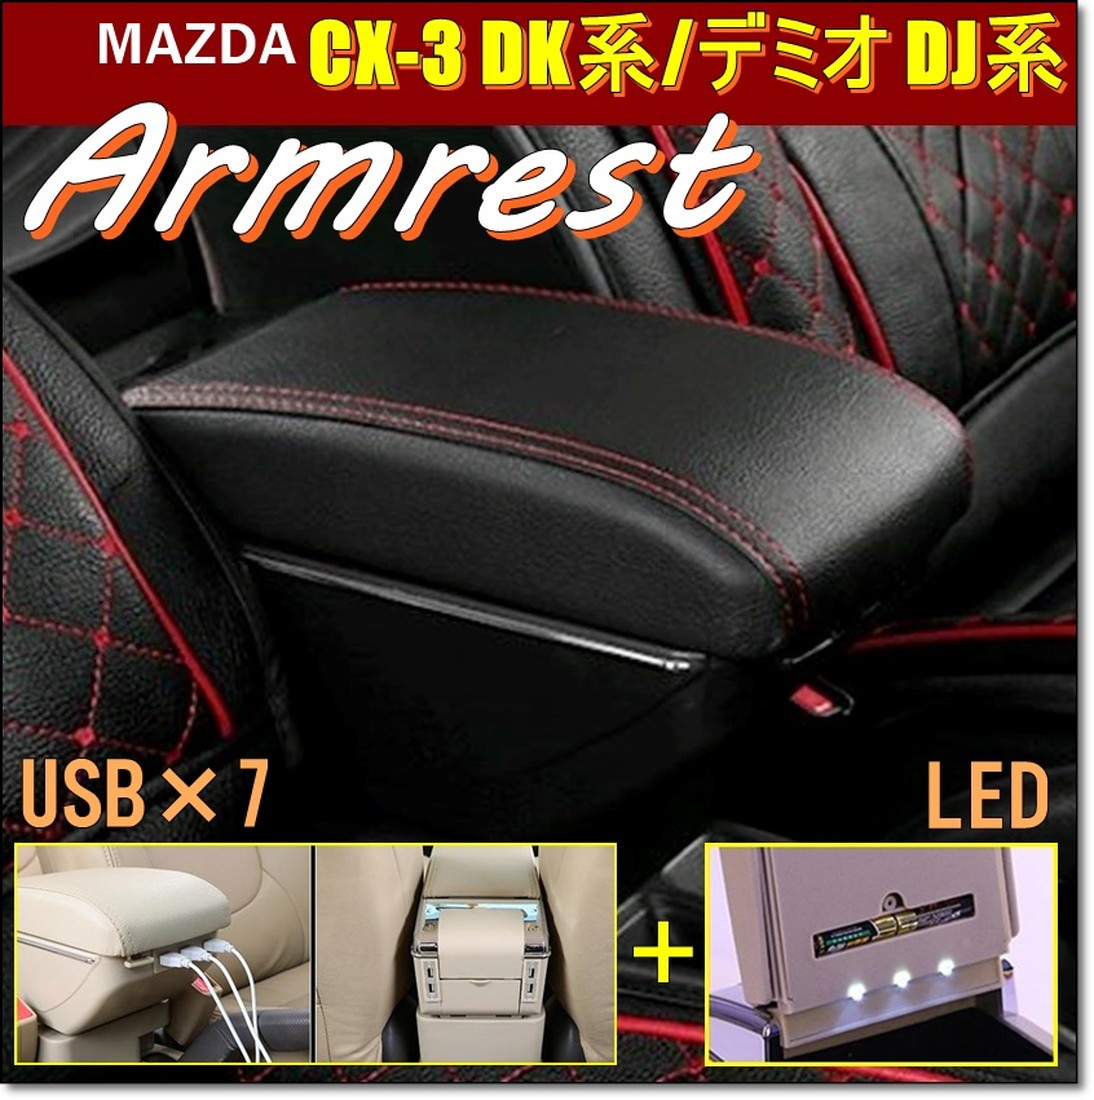 MAZDA マツダ CX-3 デミオ DJ 系 用 アームレストブラック 1段 USB コンソール ボックス 多機能充電 灰皿 車内 収納 充実  小物入れ (送料無料)hos-d59